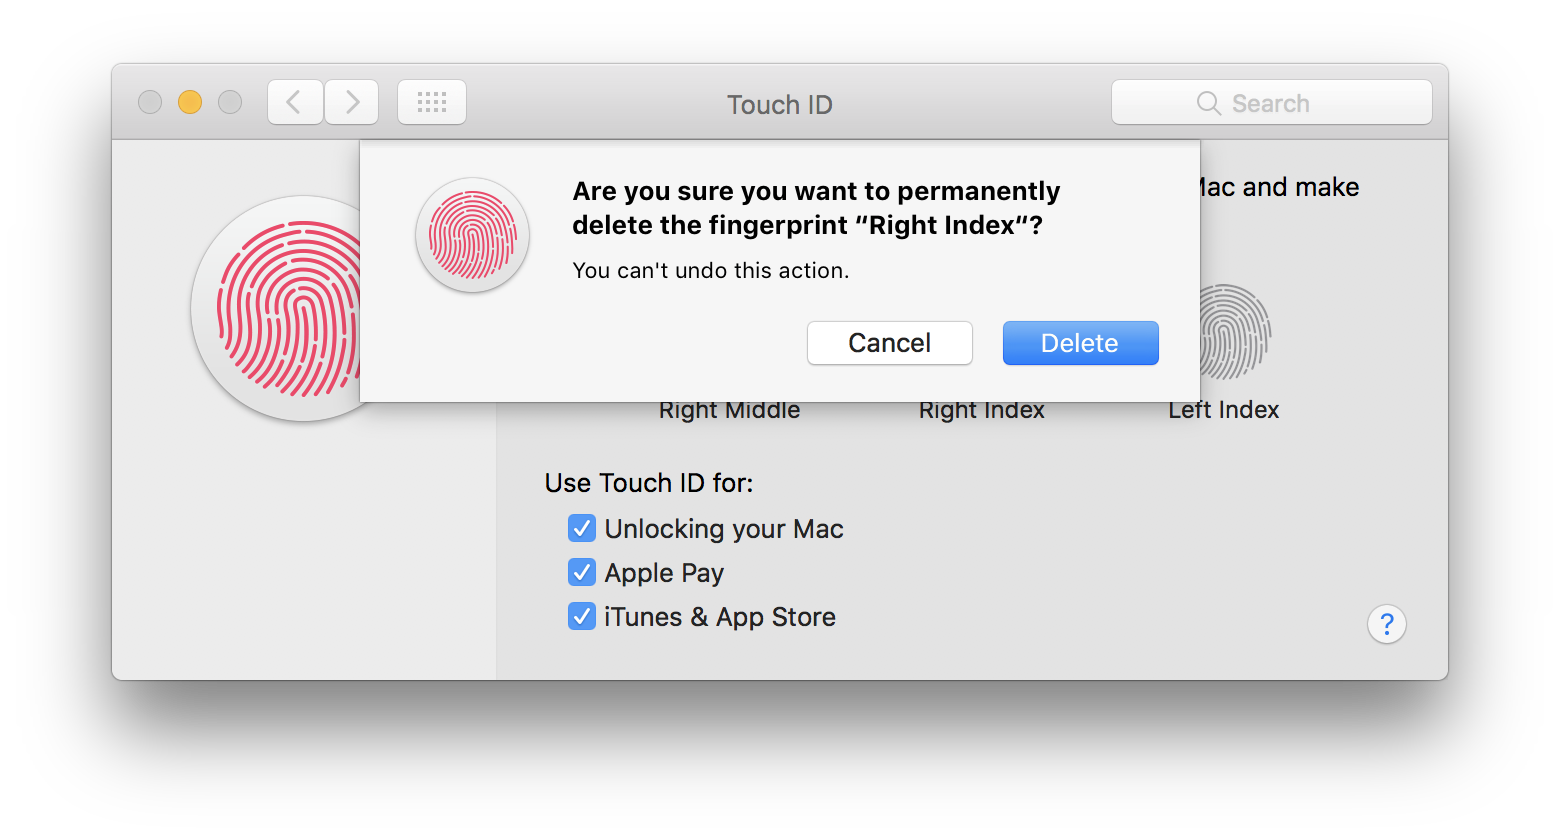 macos-system-preferences-touch-id-delete-fingerprint-mac-screenshot-002